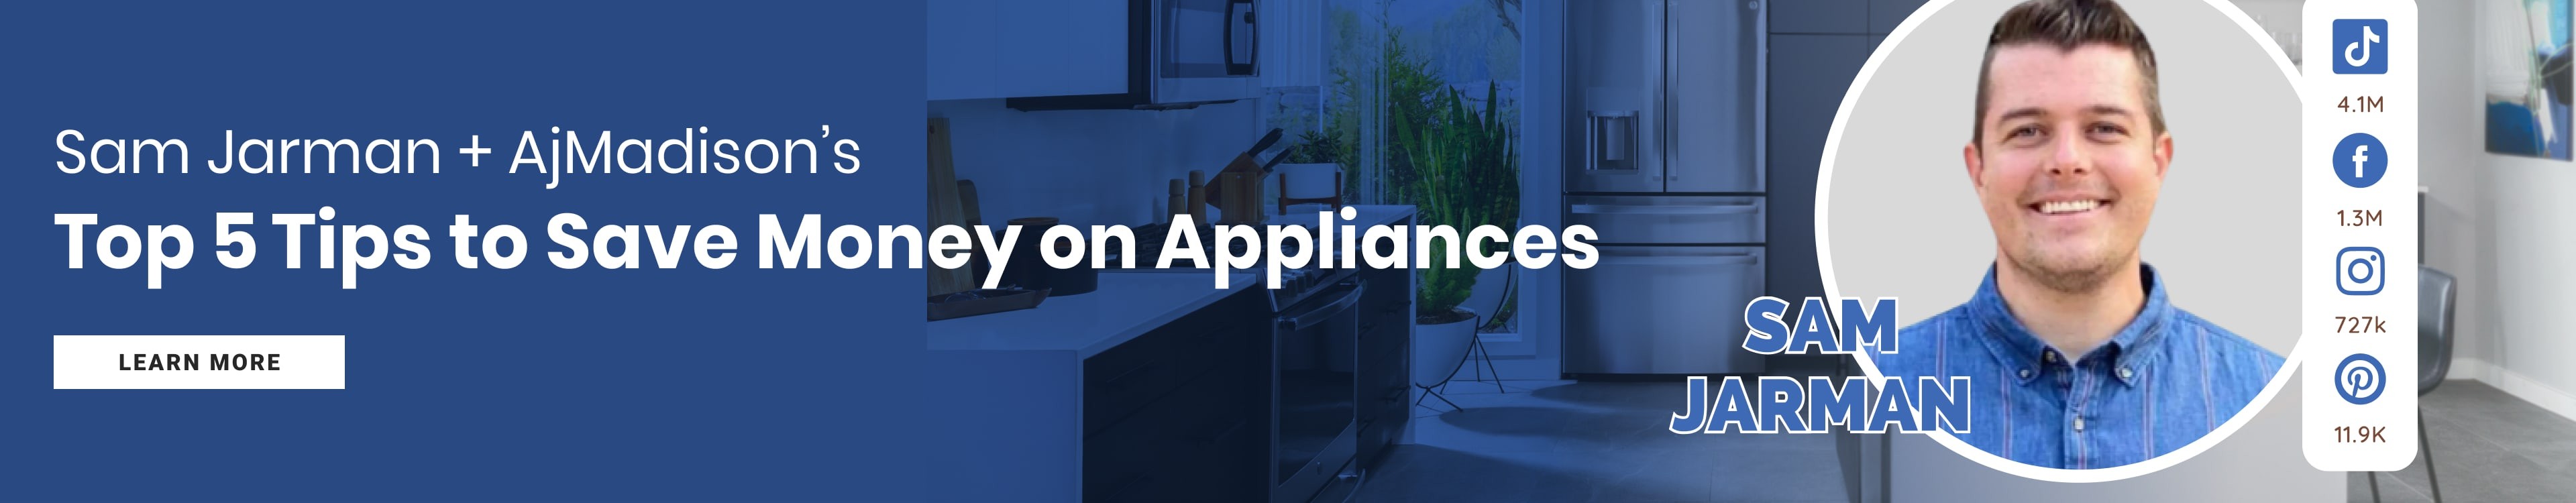 Sam Jarman and AjMadison's Top 5 Tips to Save Money on Appliances